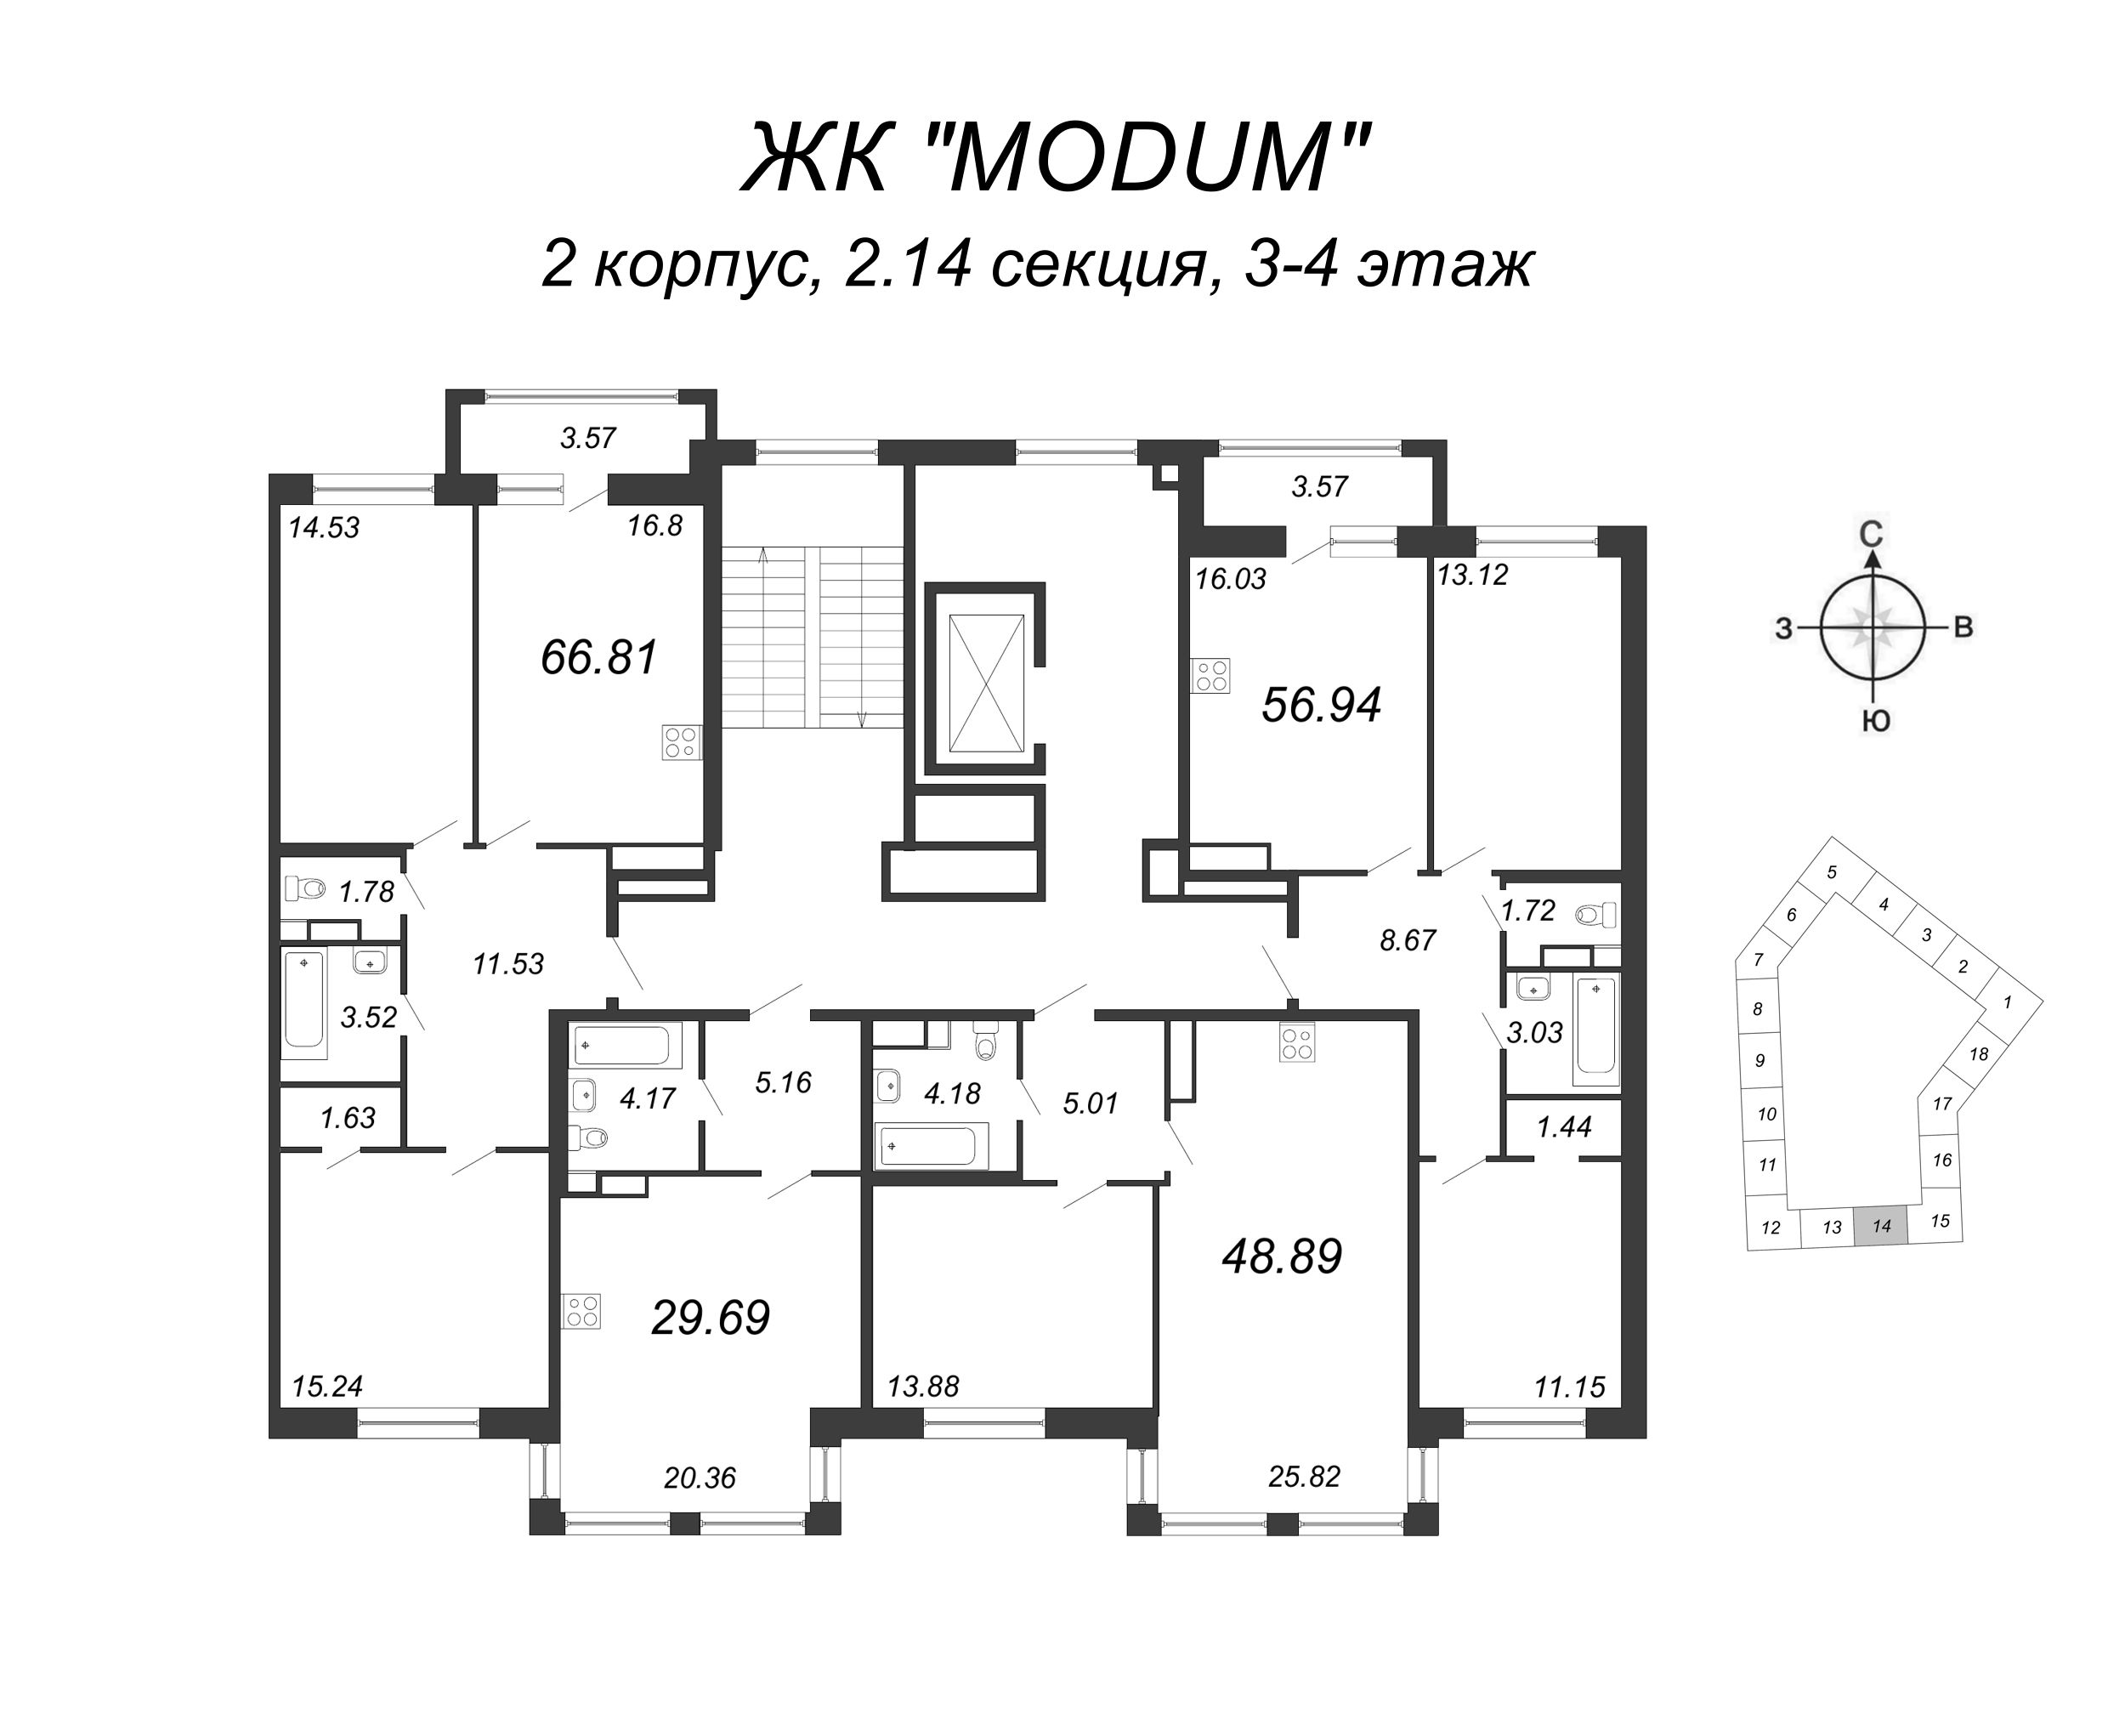 2-комнатная (Евро) квартира, 48.89 м² - планировка этажа